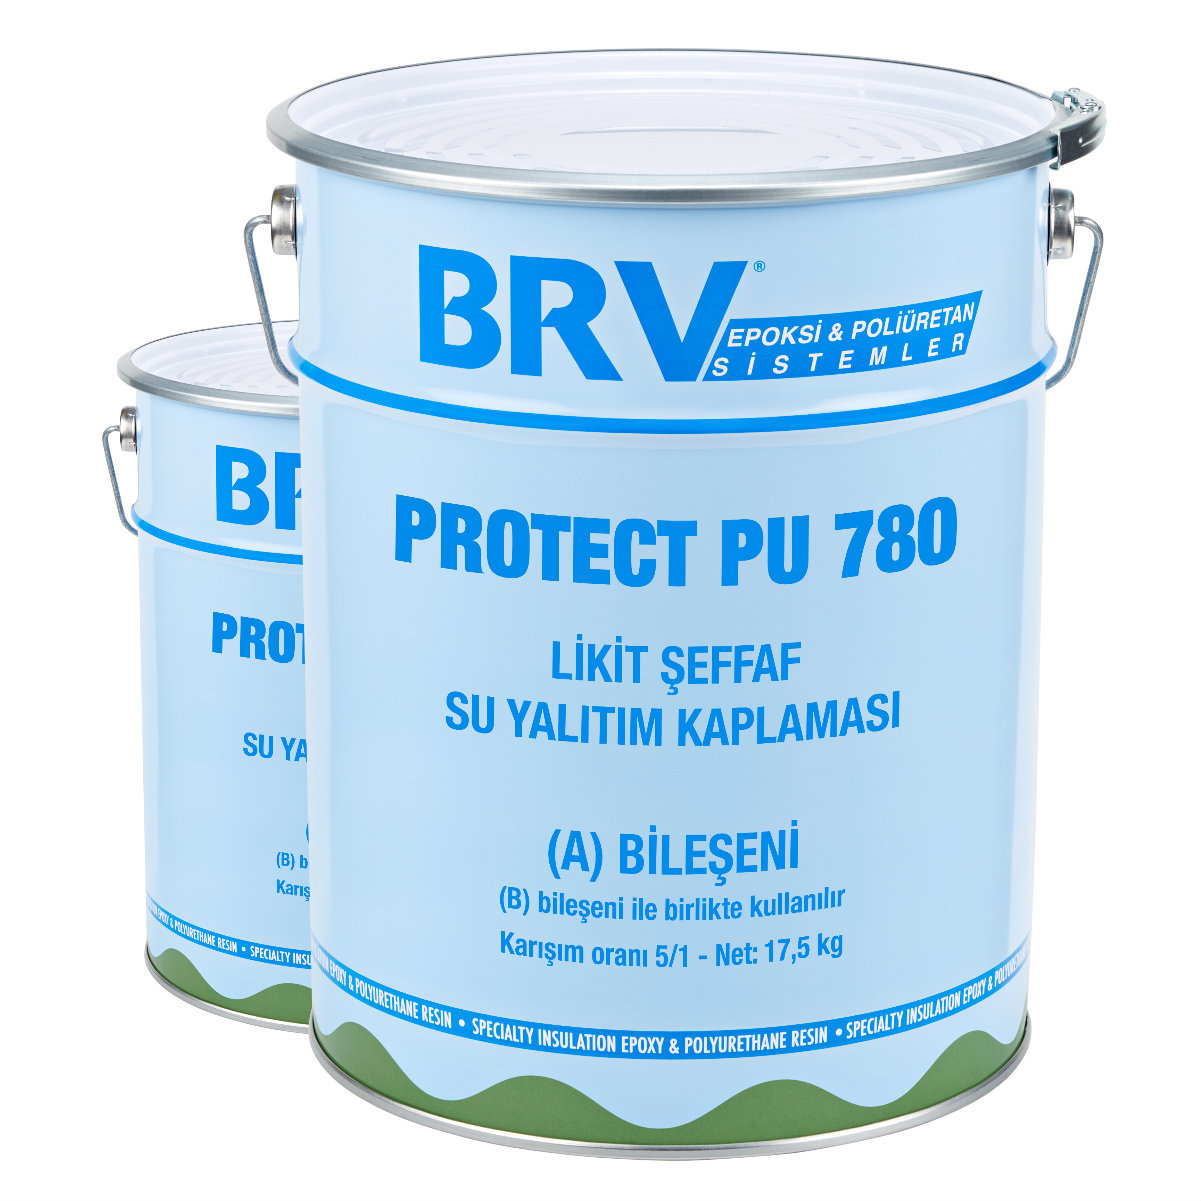 BRV PROTECT PU 780 - 4Kg - Likit Şeffaf Su Yalıtım Kaplaması